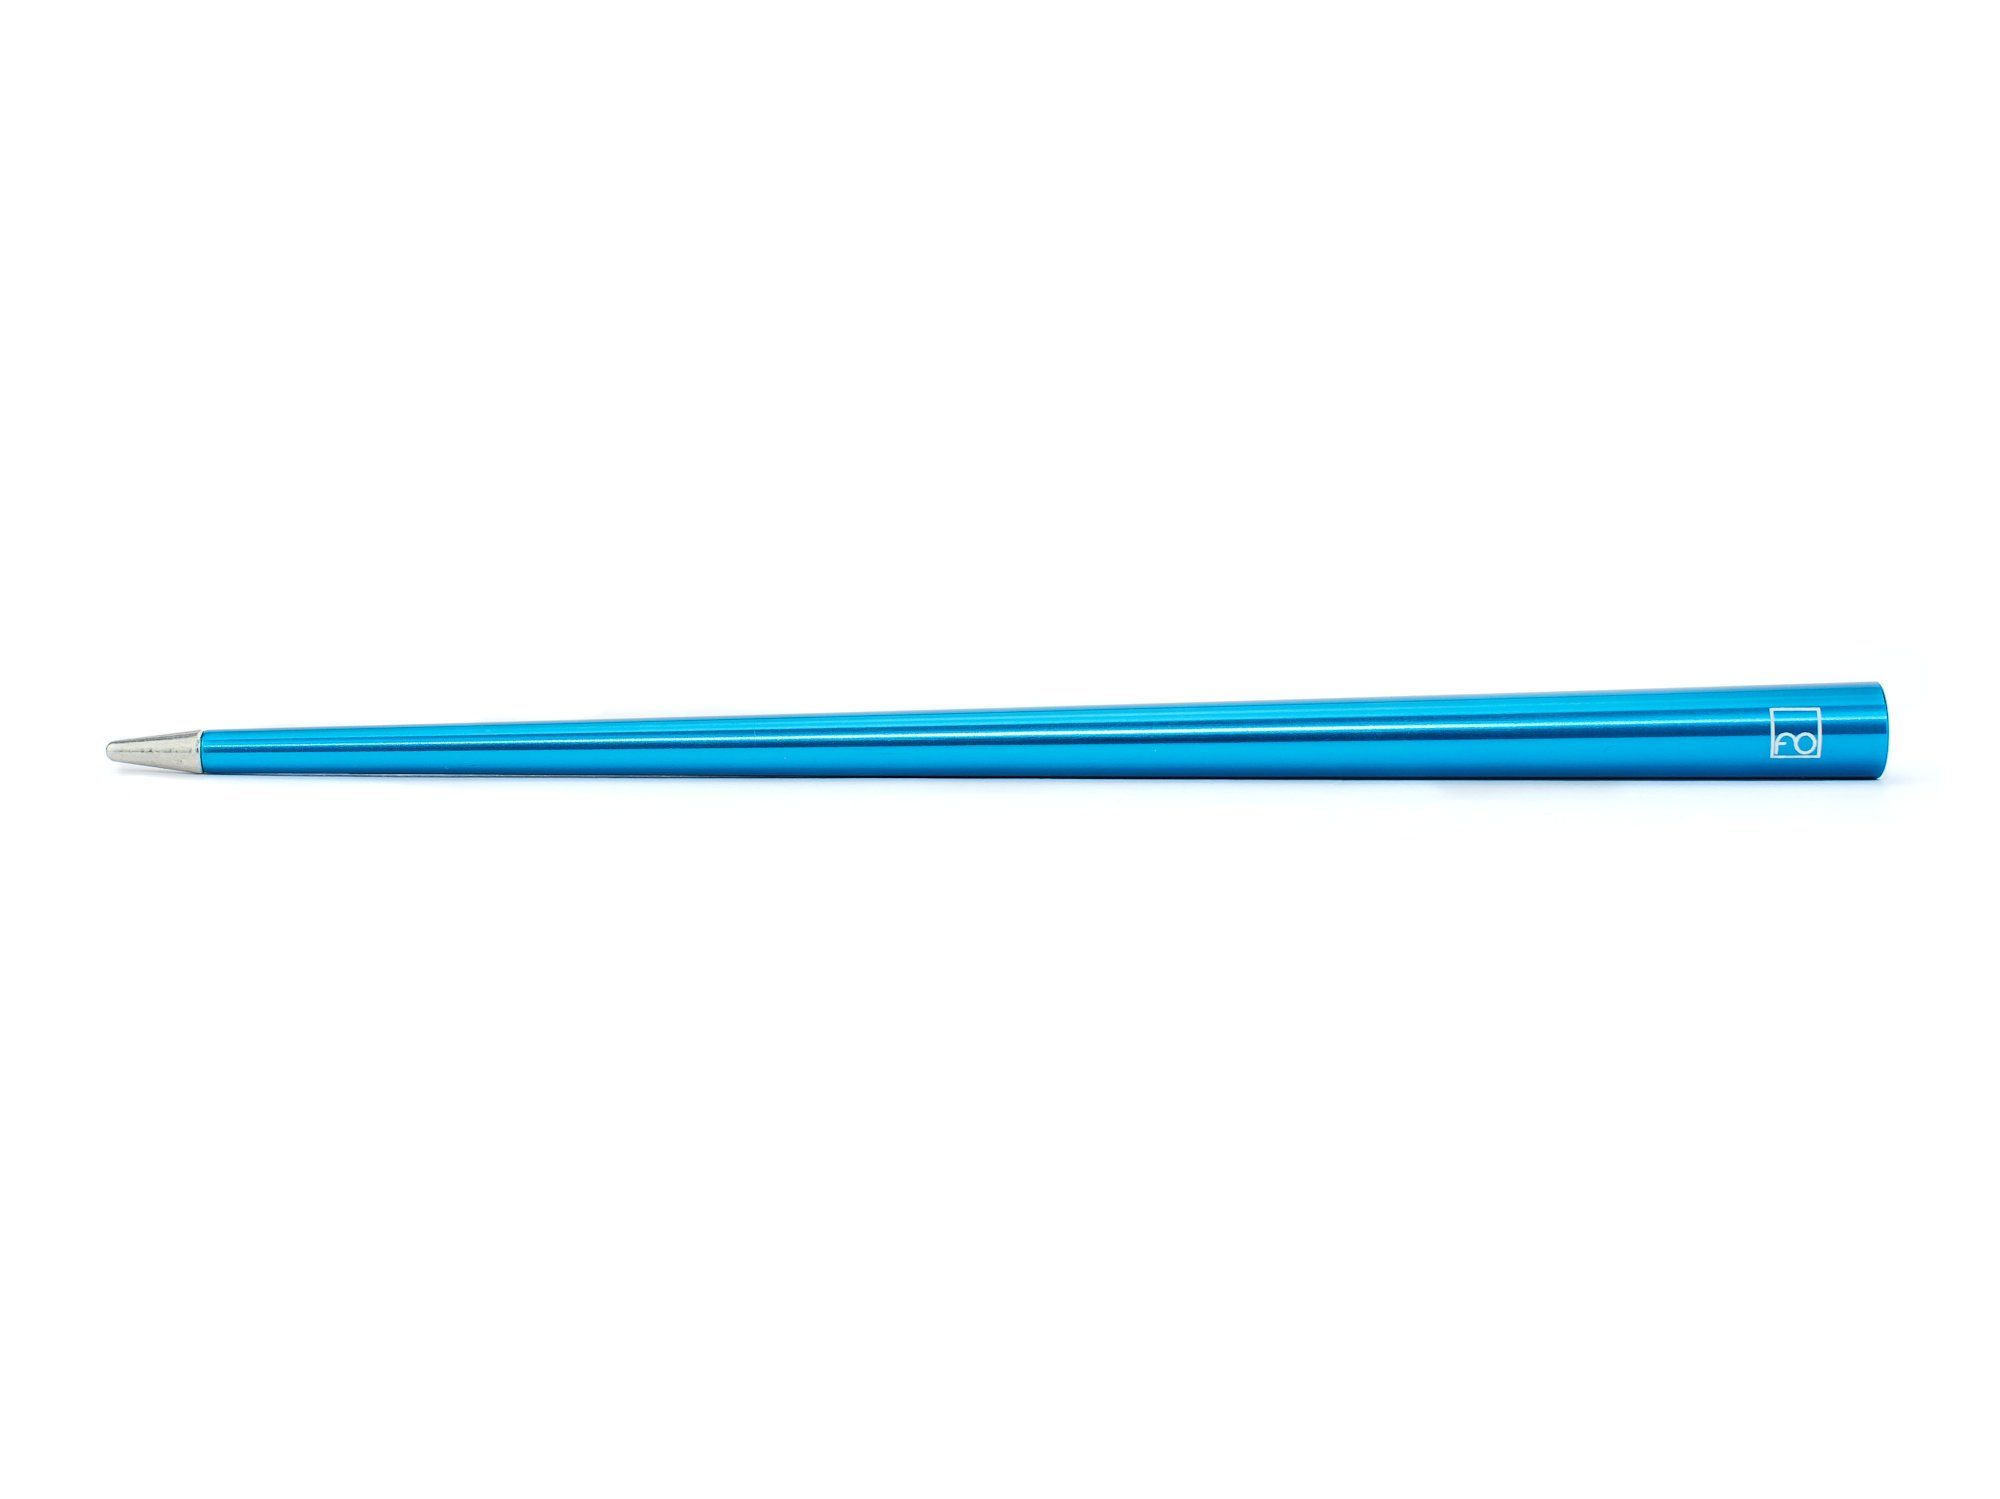 Forever Prima Pininfarina Blau, Blue Set) Electric Stift (kein Bleistift Schreibgerät Ethergraf-Spitze